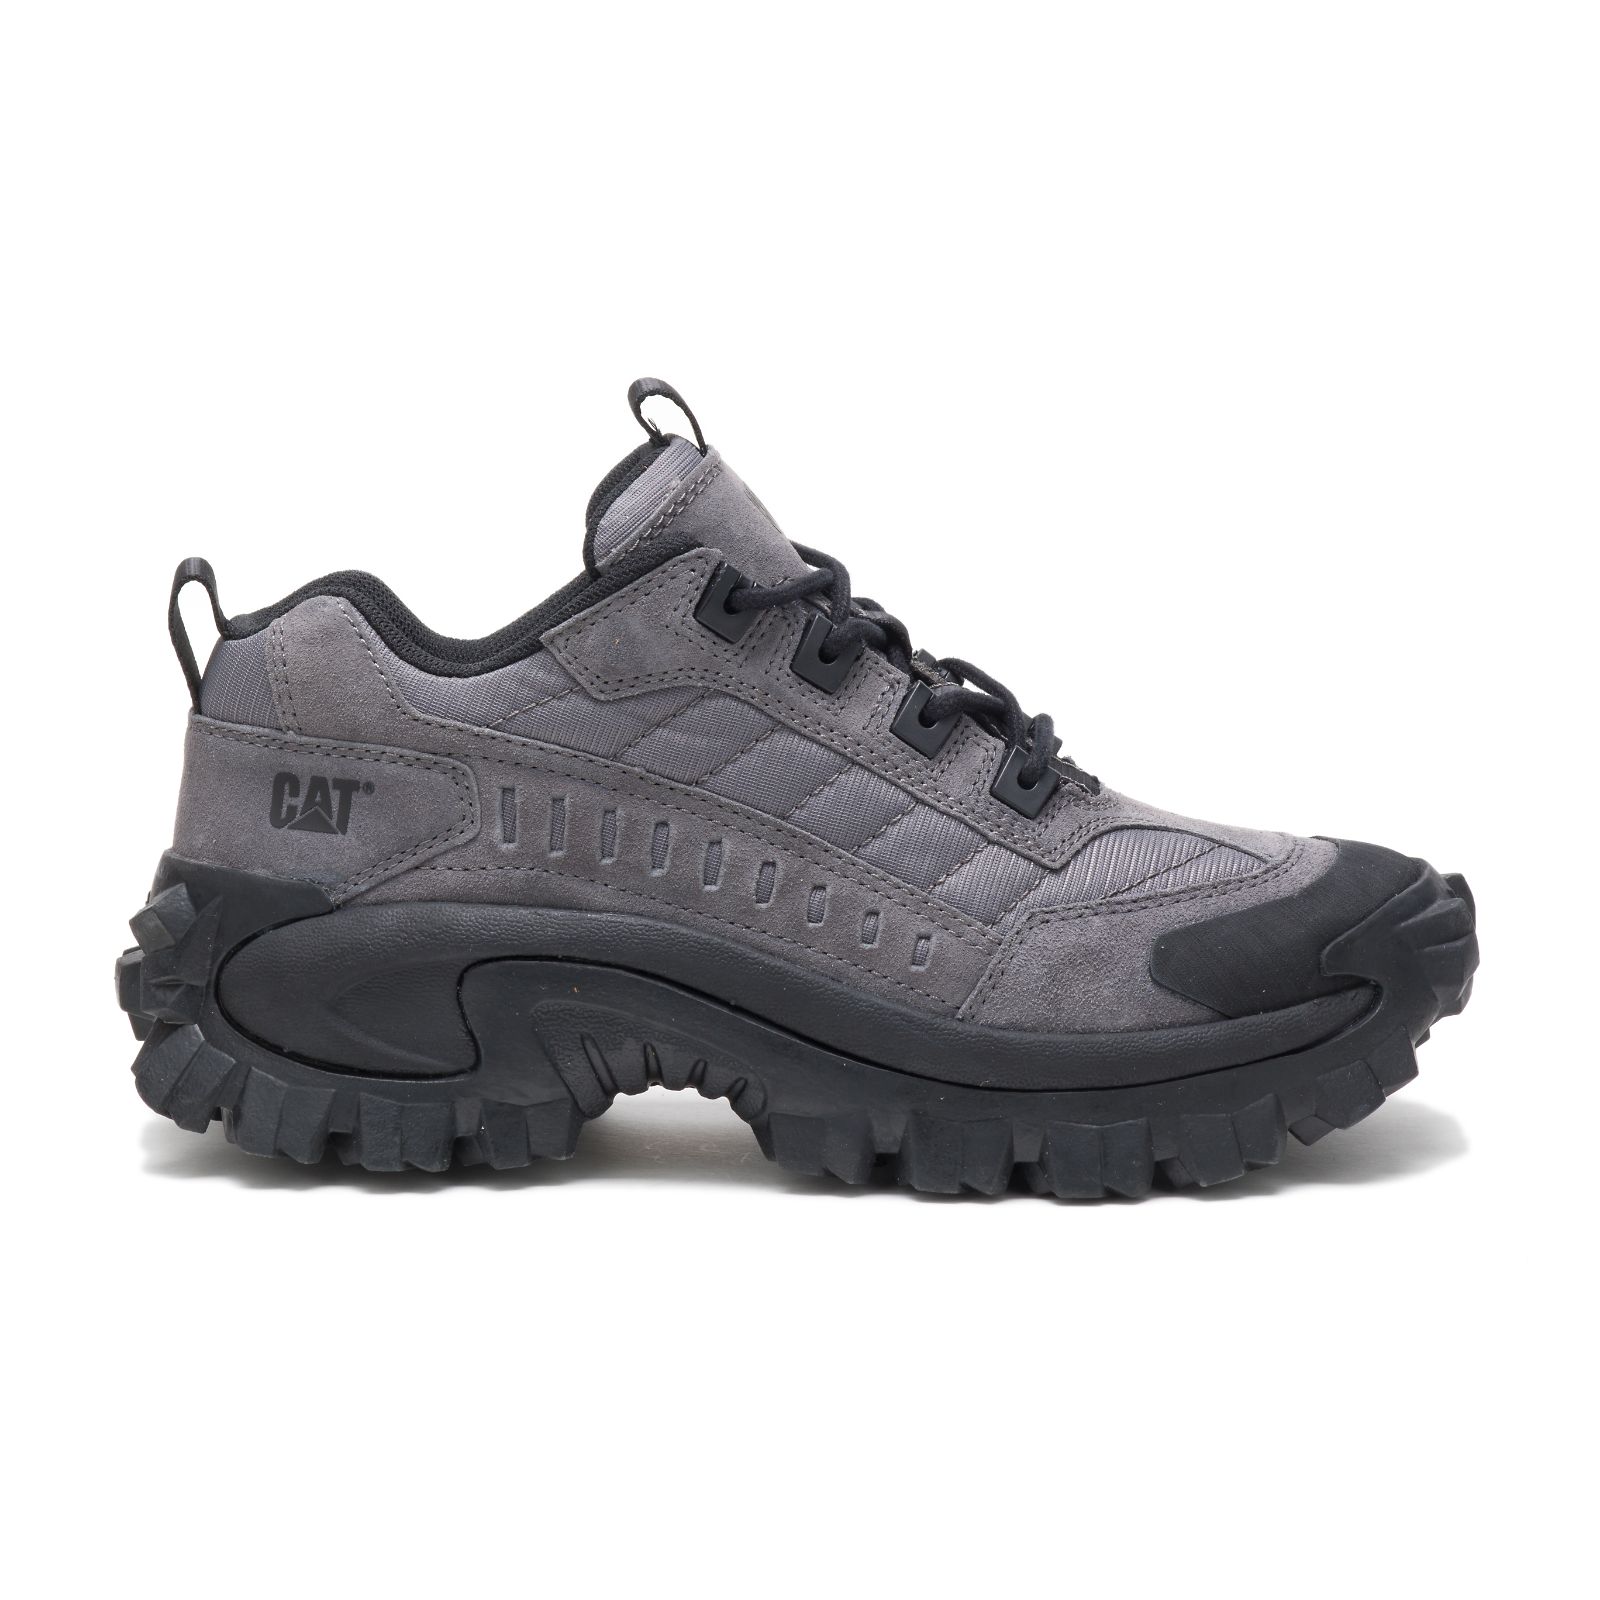 deep grey/Black Caterpillar Intruder Women's Casual Shoes | Cat-518072